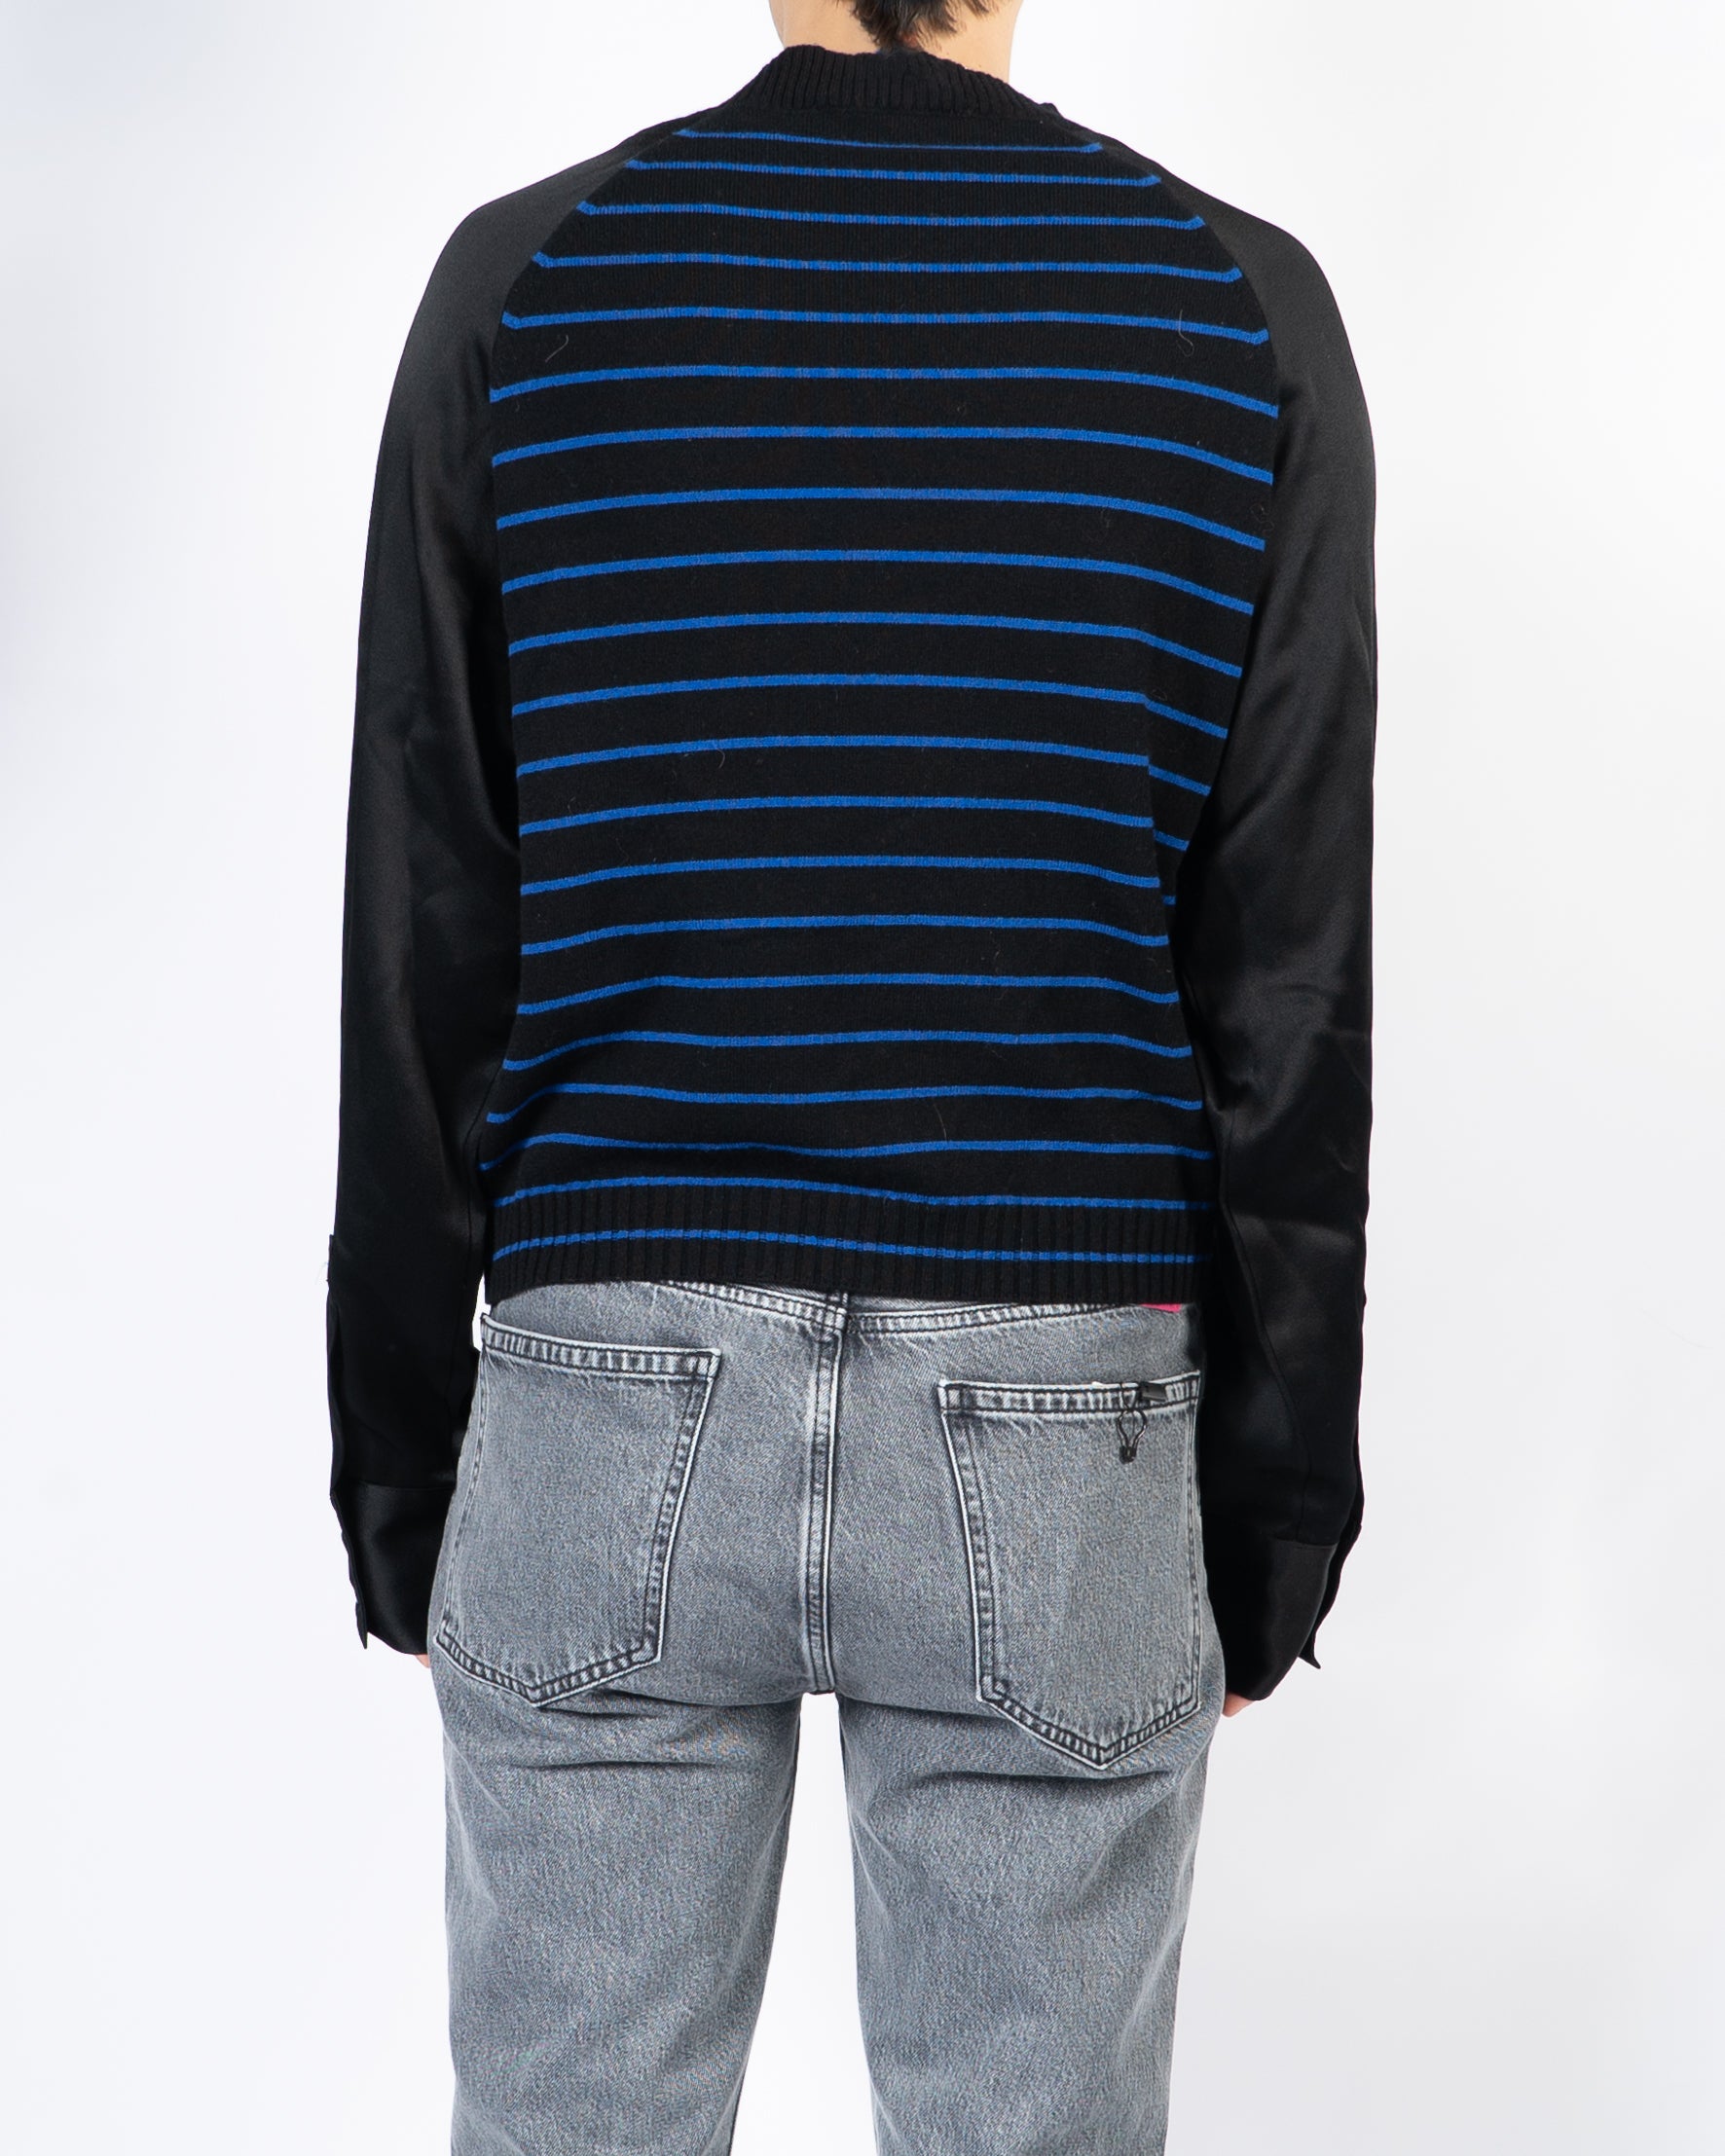 FW19 Shirt-Sleeve Striped Knit Sample